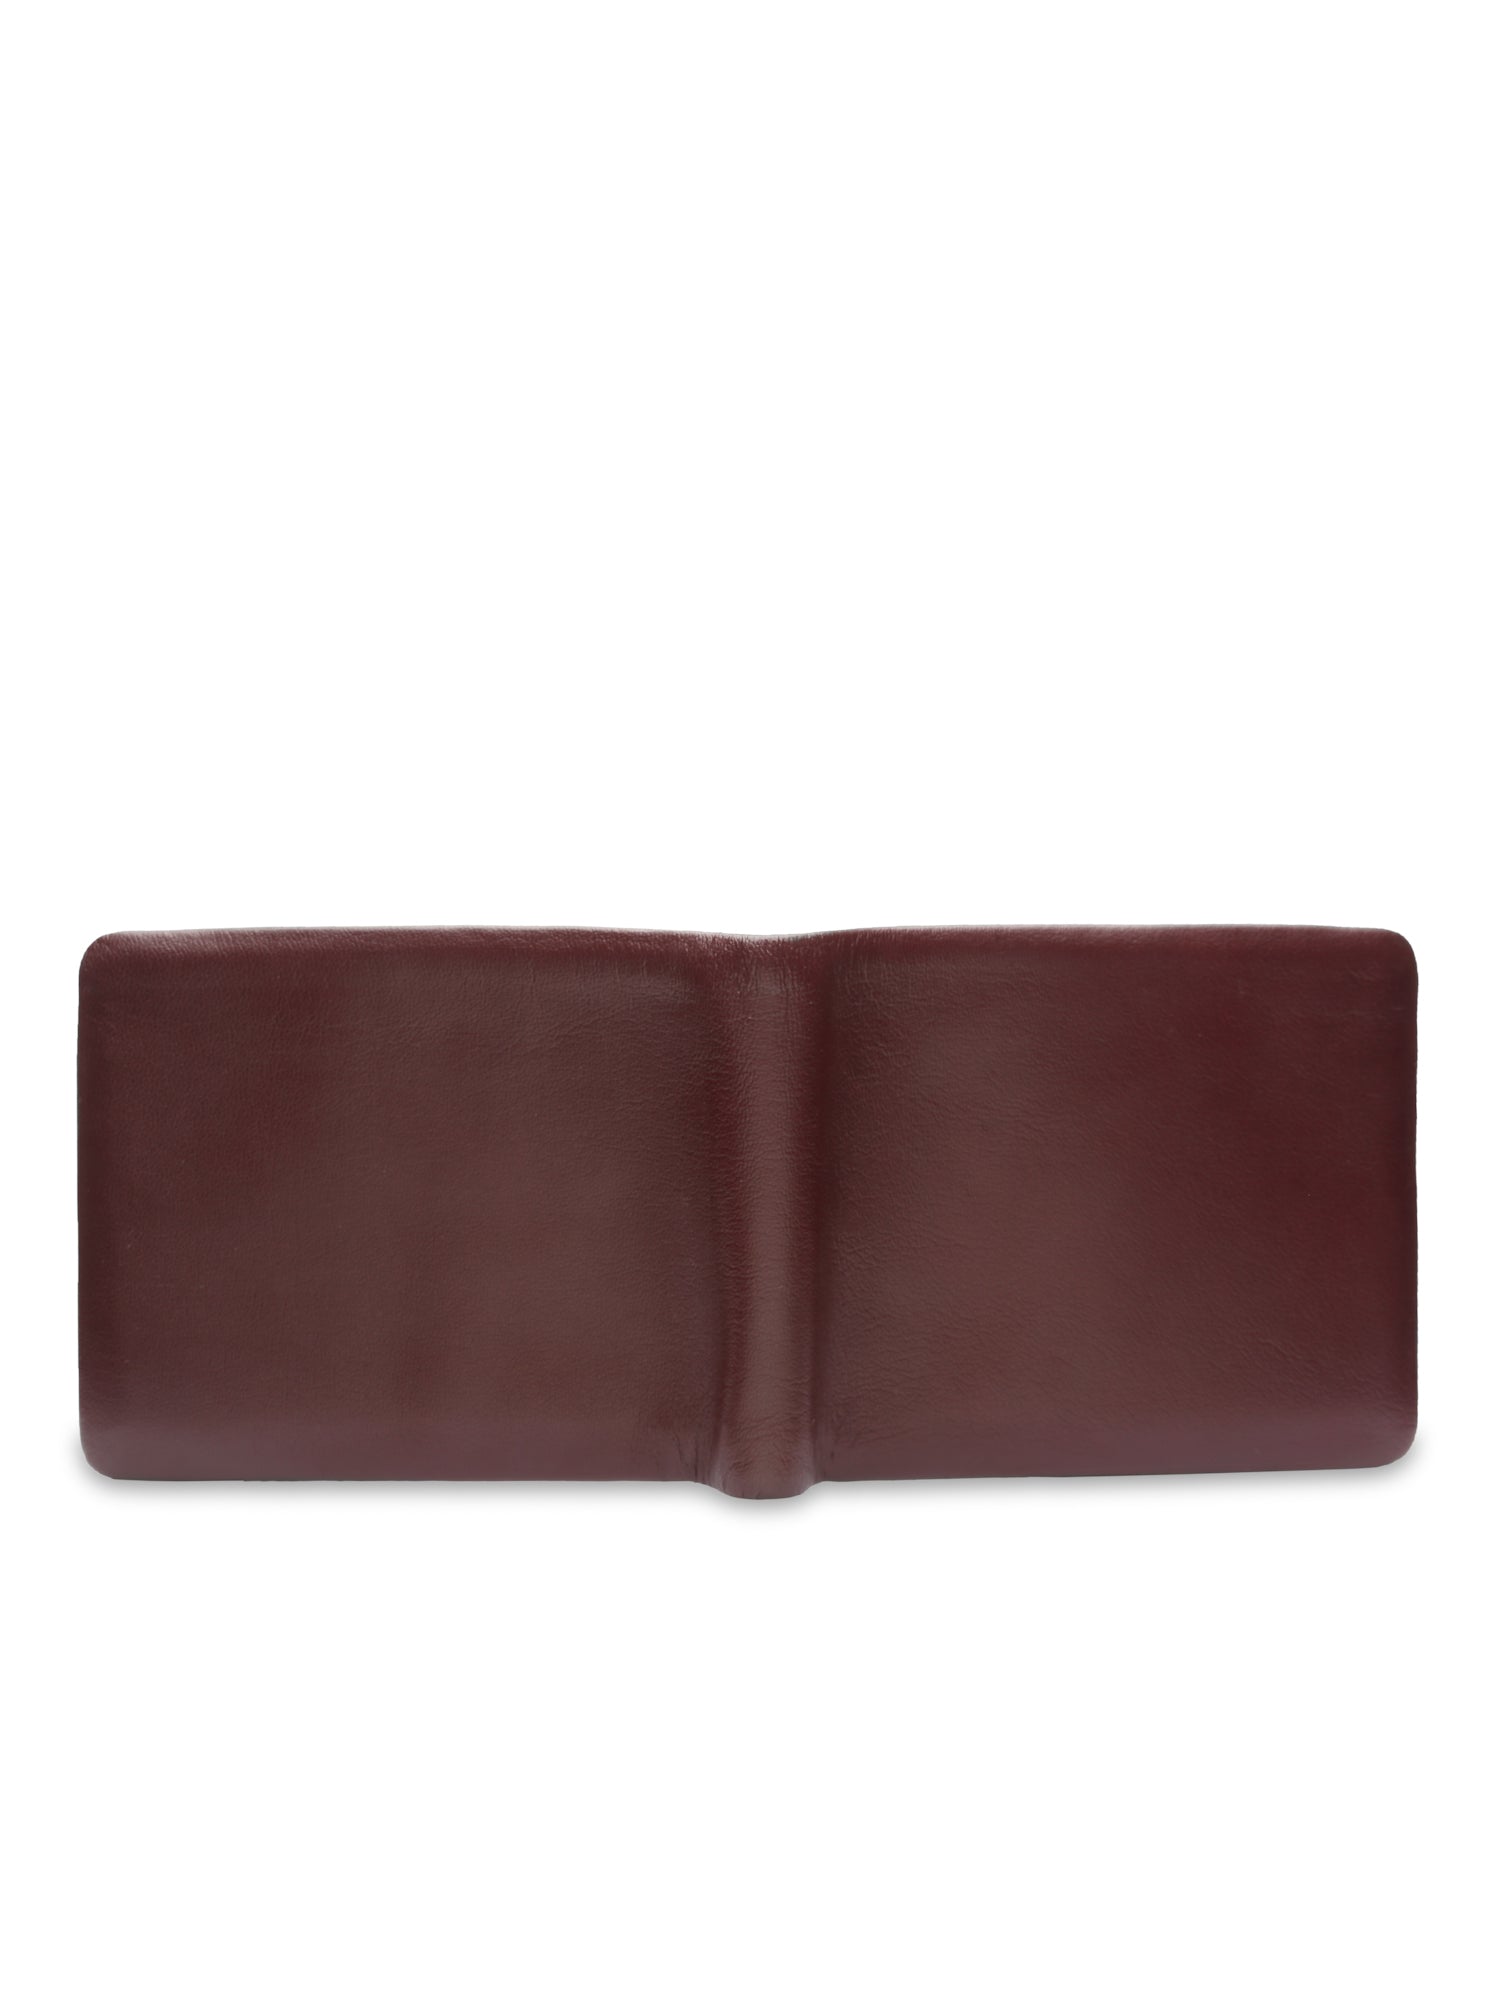 Mens' Bi Fold Soft Wallet - Cherry Brown